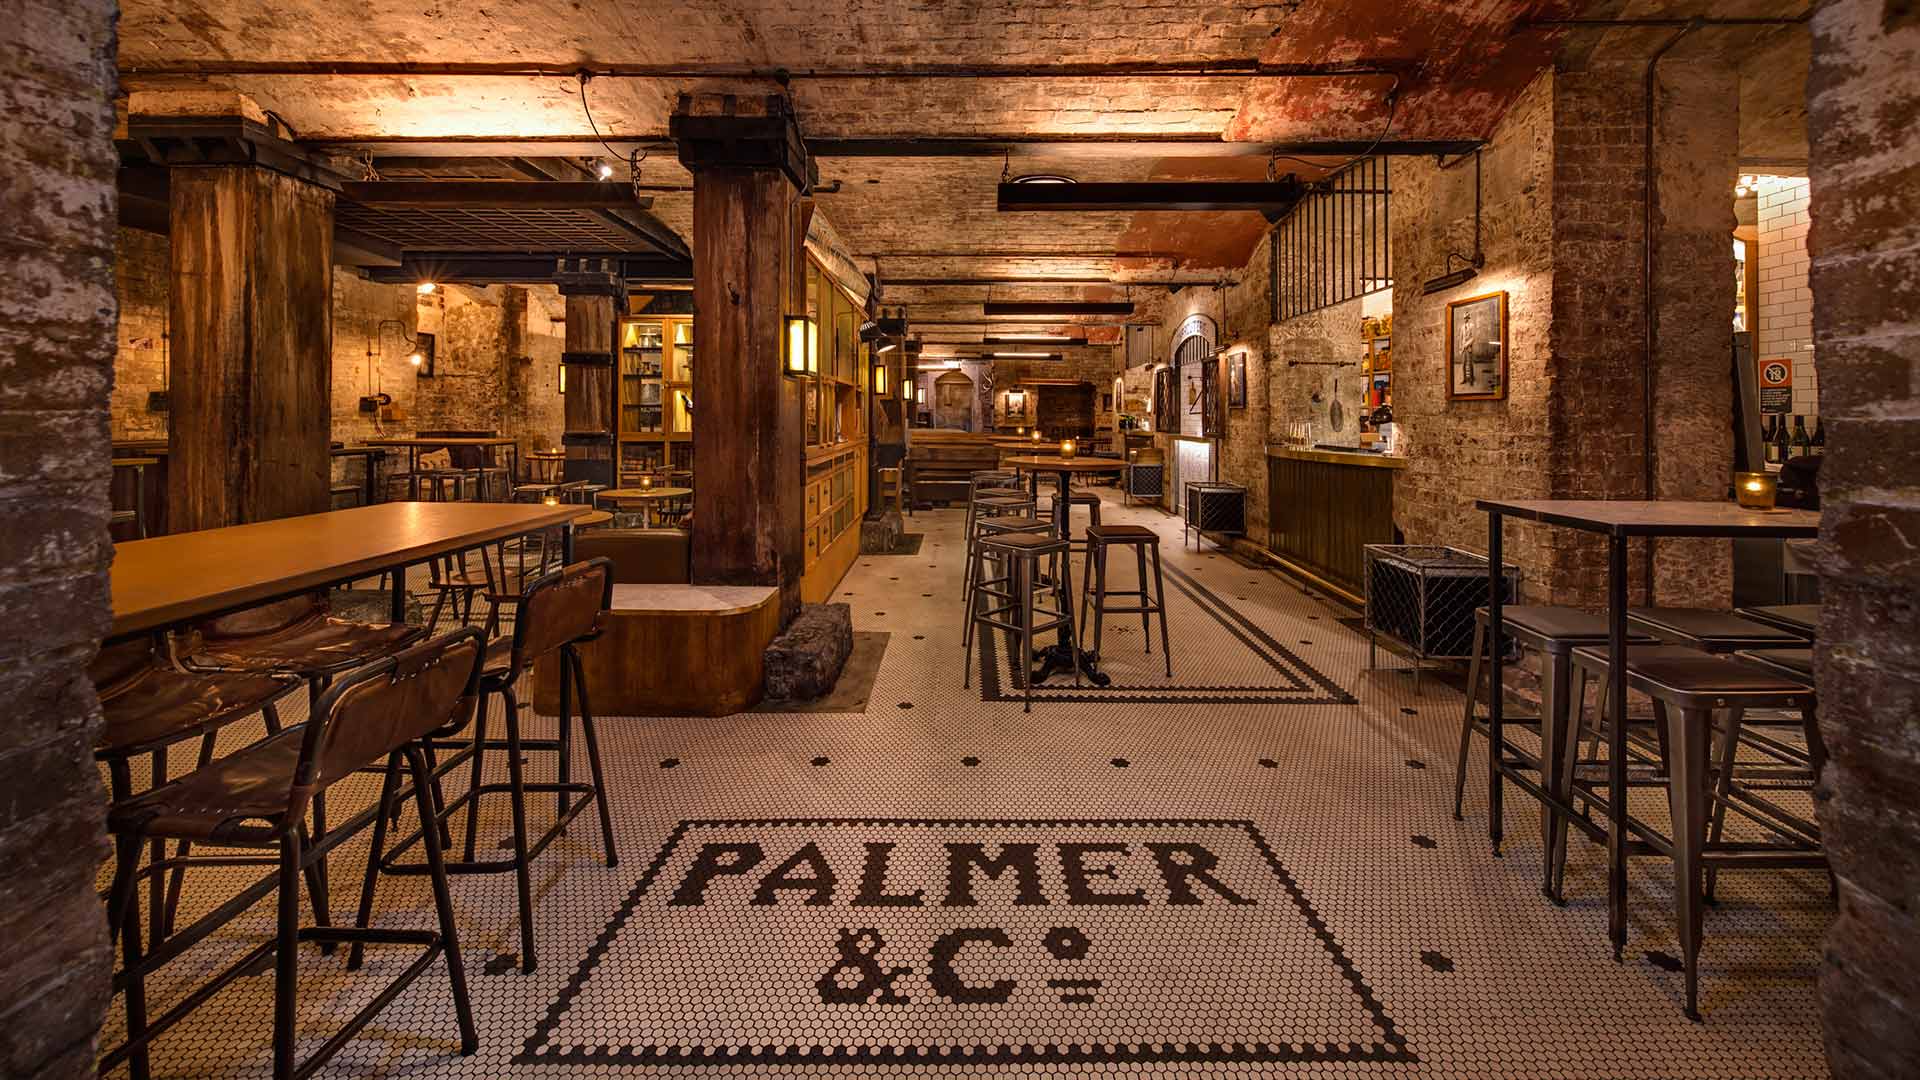 Palmer & Co.